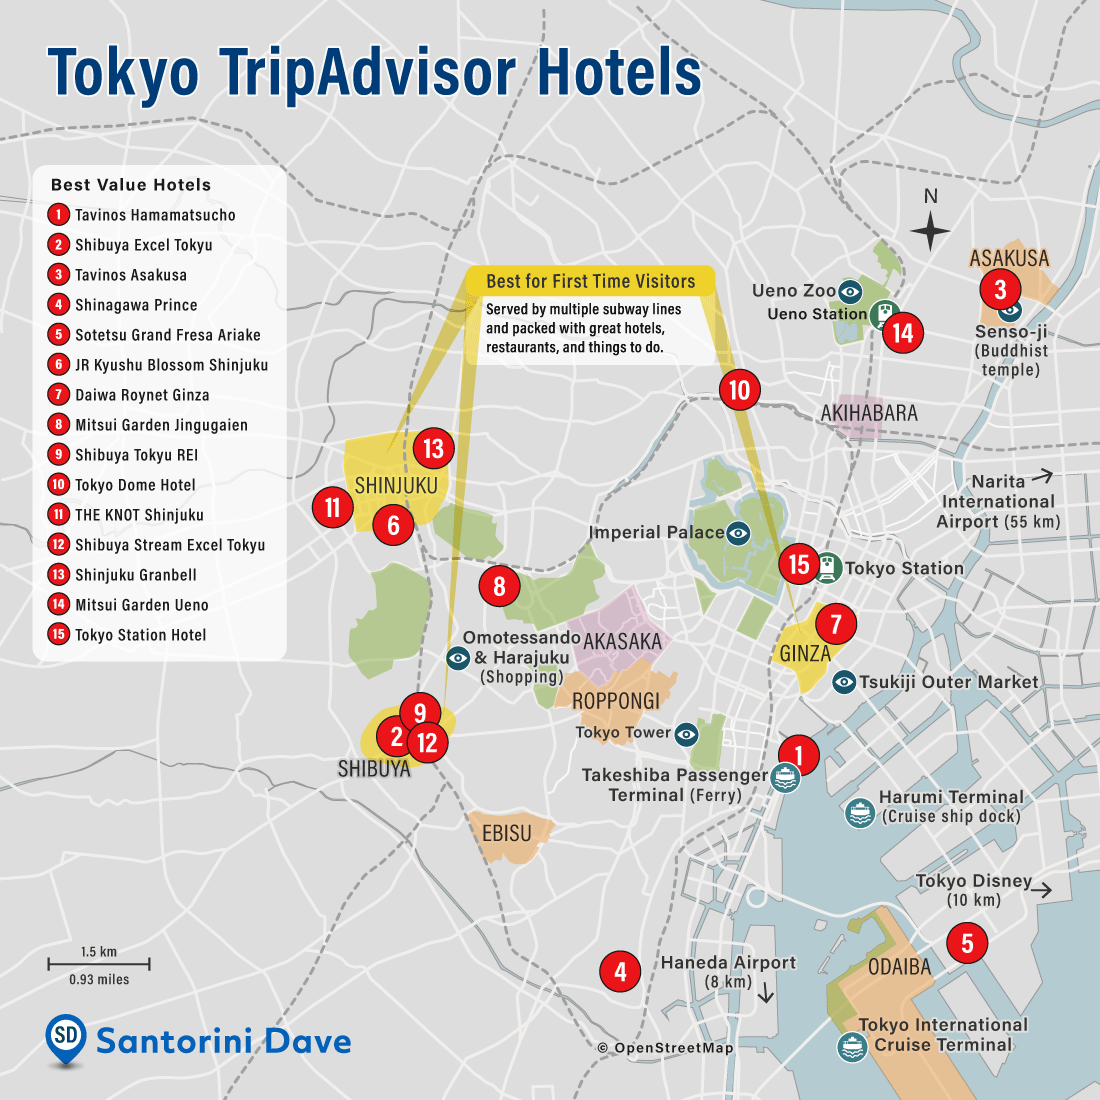 Tokyo TripAdvisor Hotels